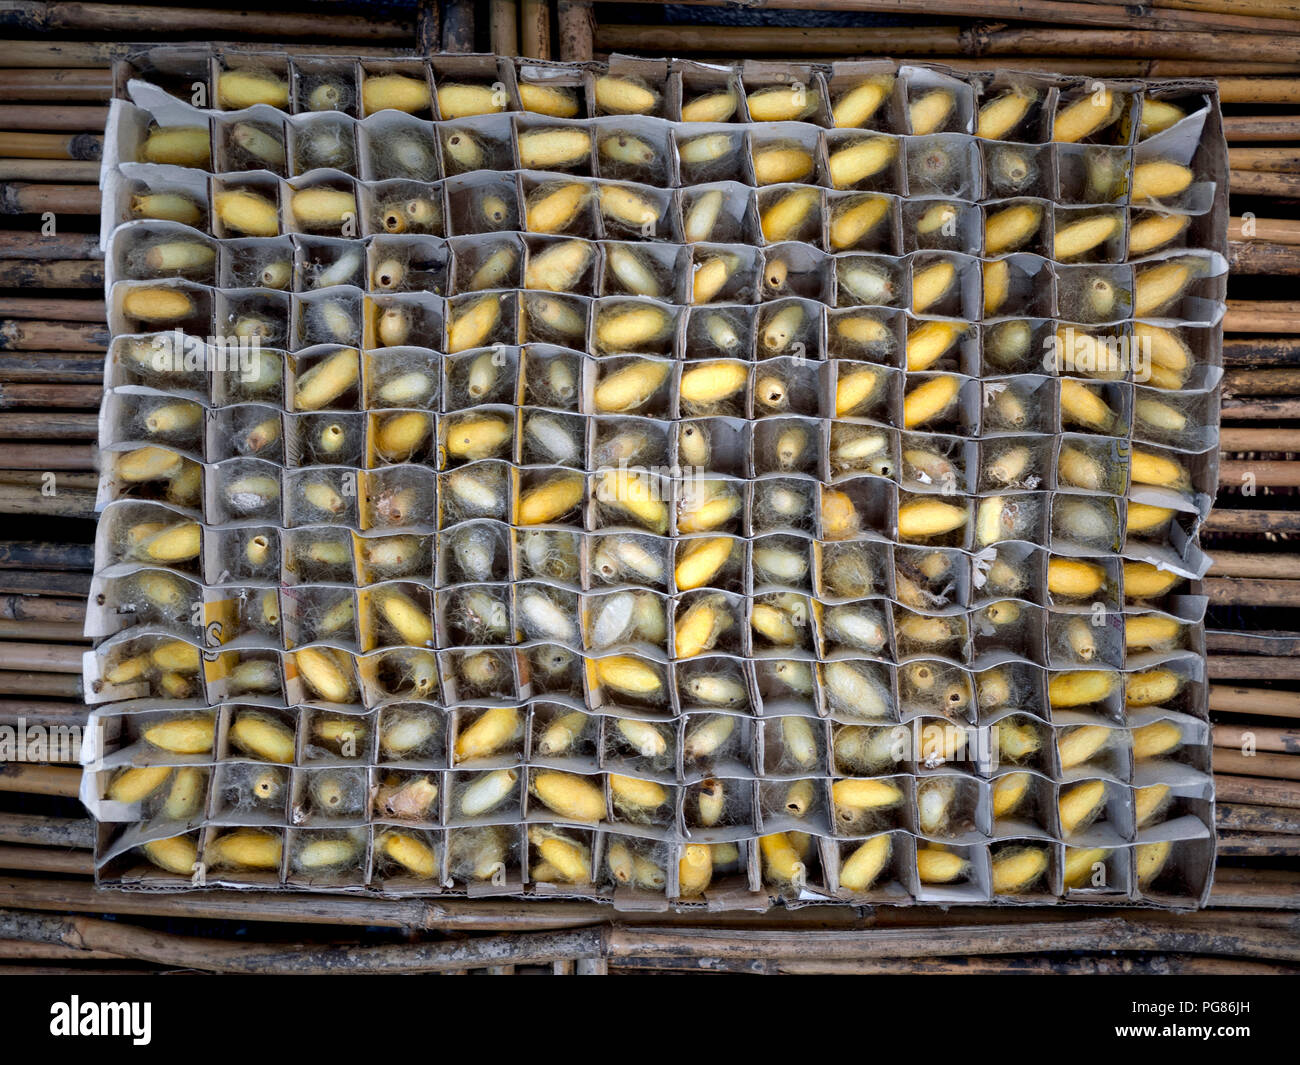 Thailand silkworm production farm with silk worm cocoon and silkworm larvae Stock Photo